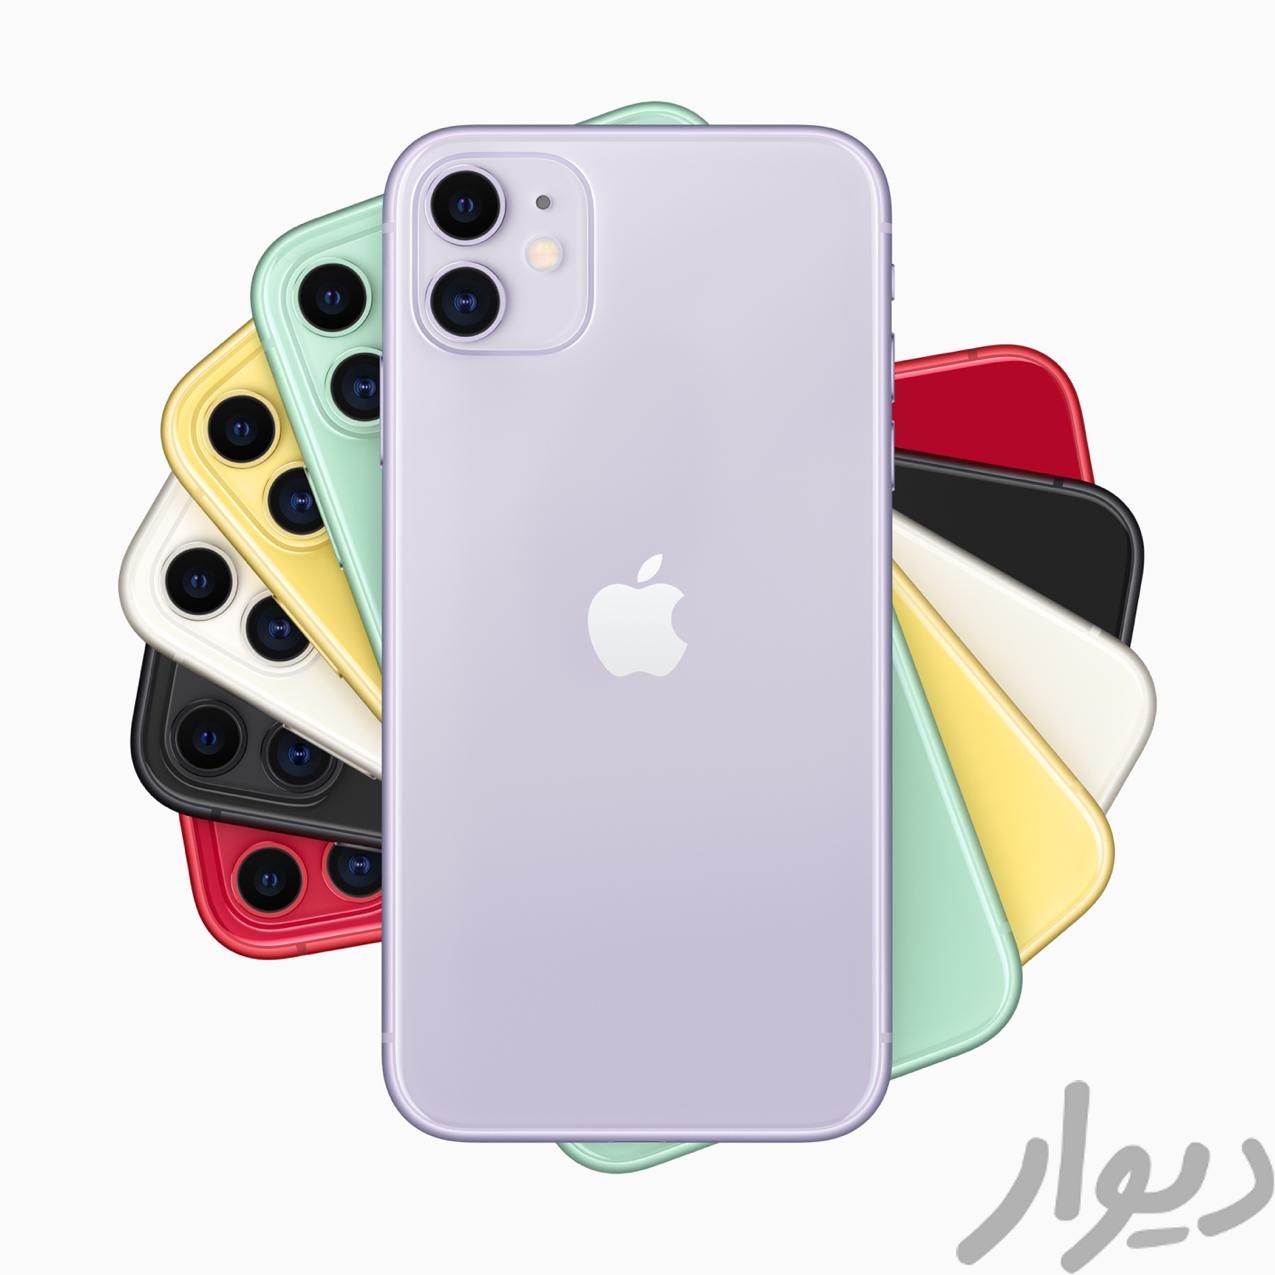 اپل iPhone 11 با حافظهٔ ۱۲۸ گیگابایت|موبایل|تهران, ونک|دیوار